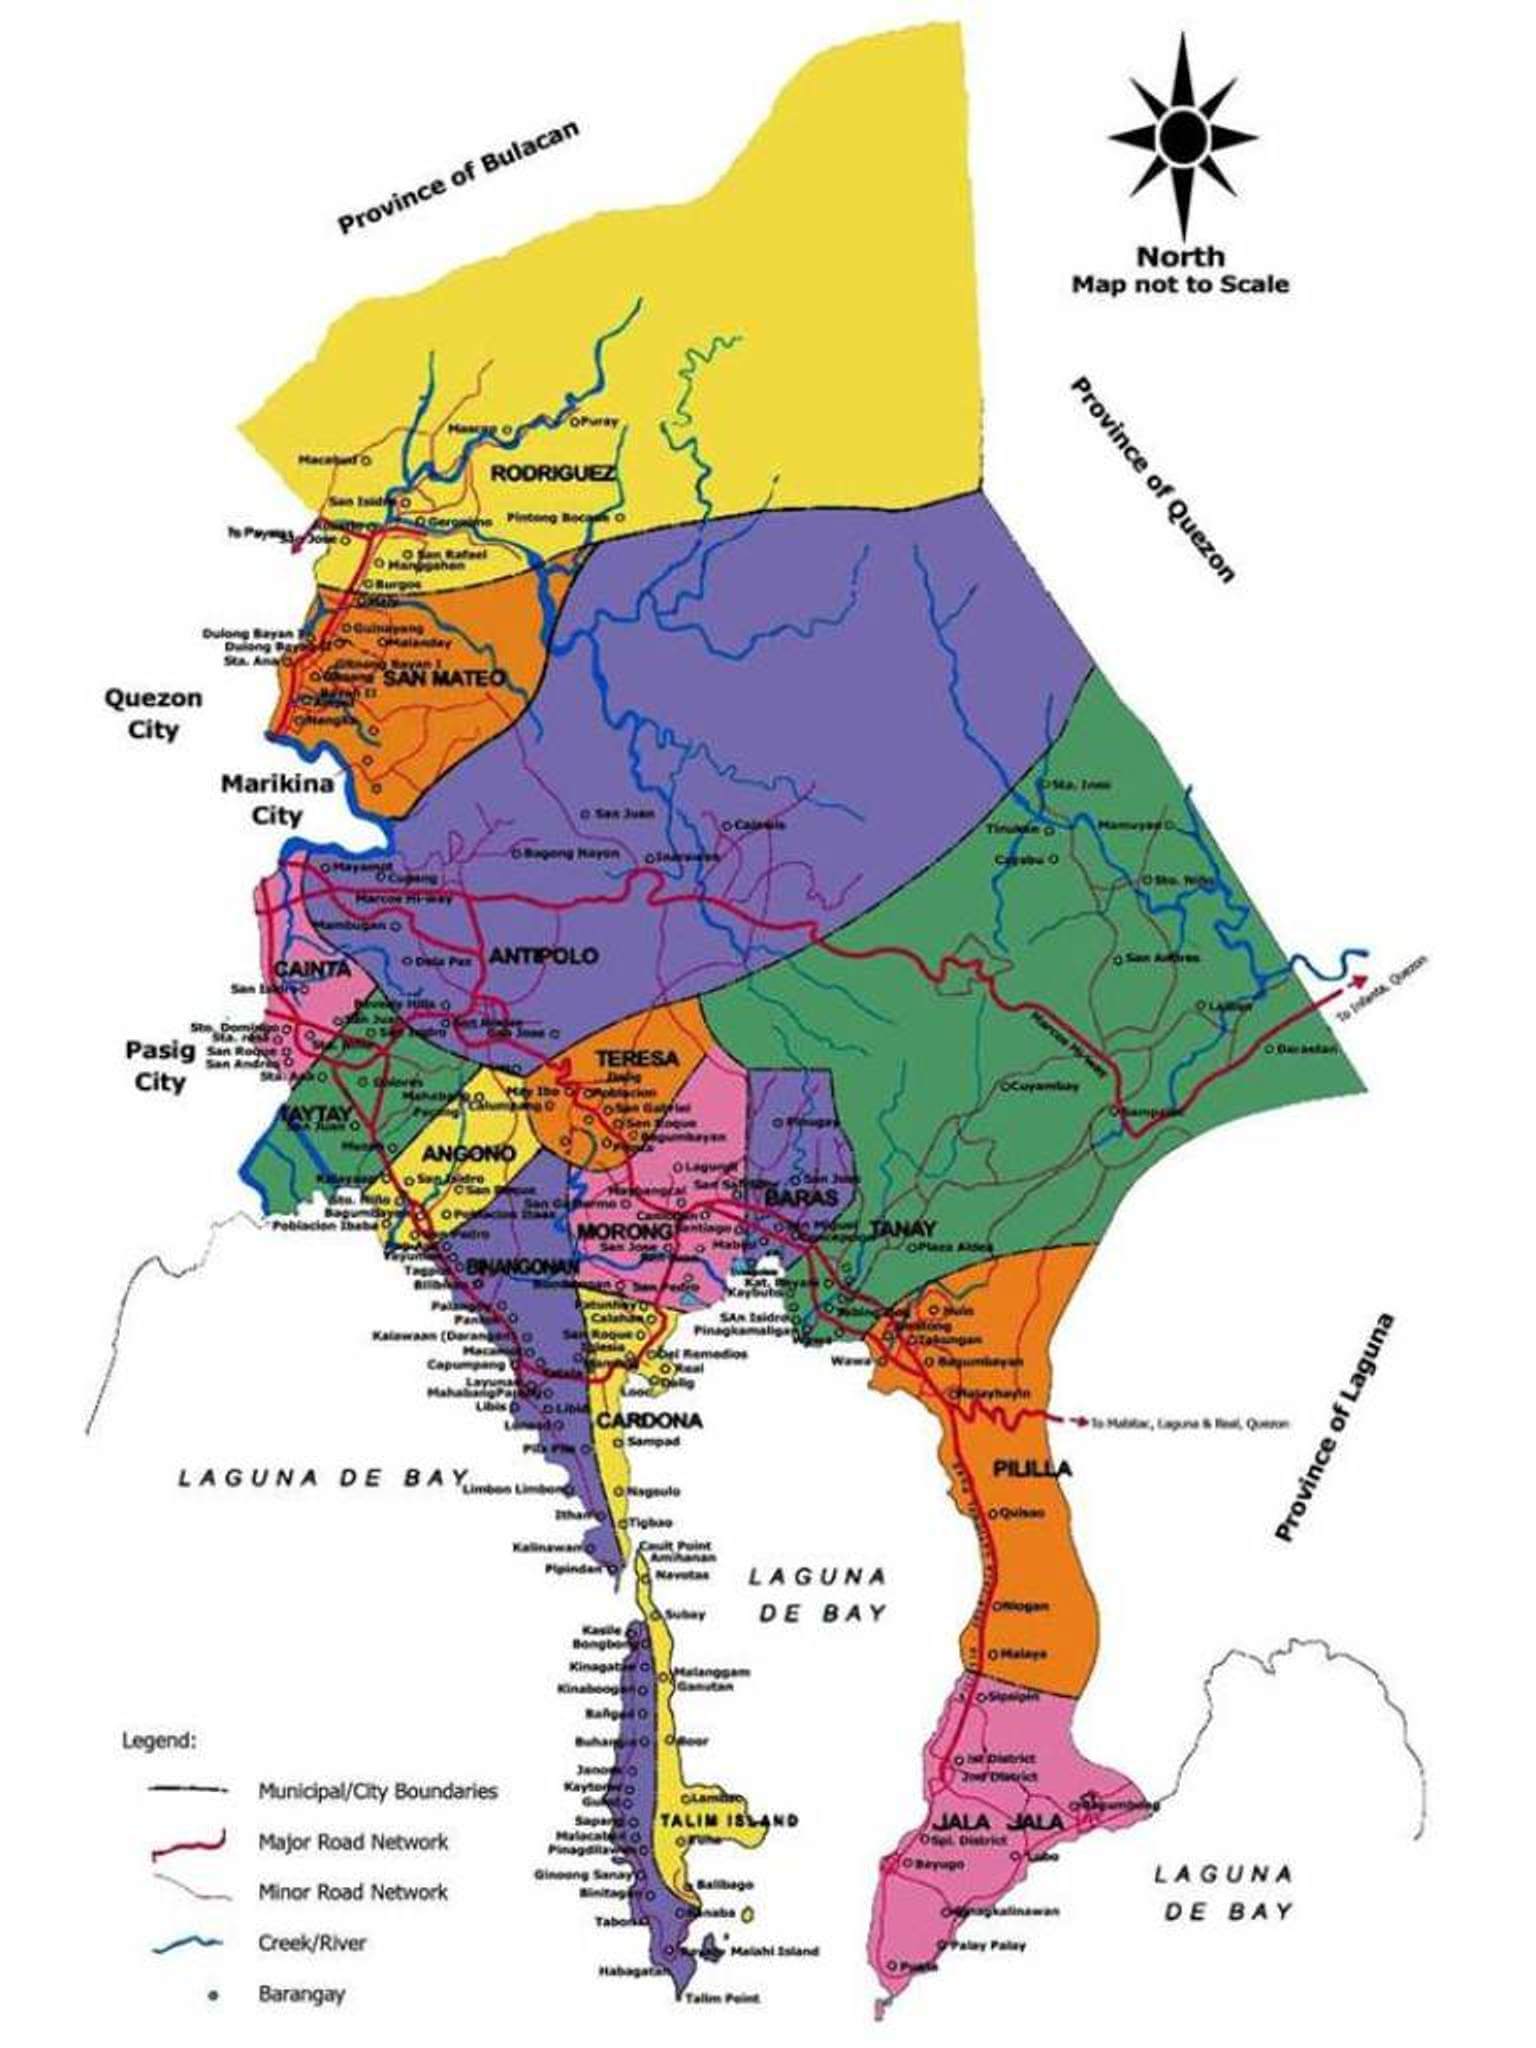 philippines political map provinces